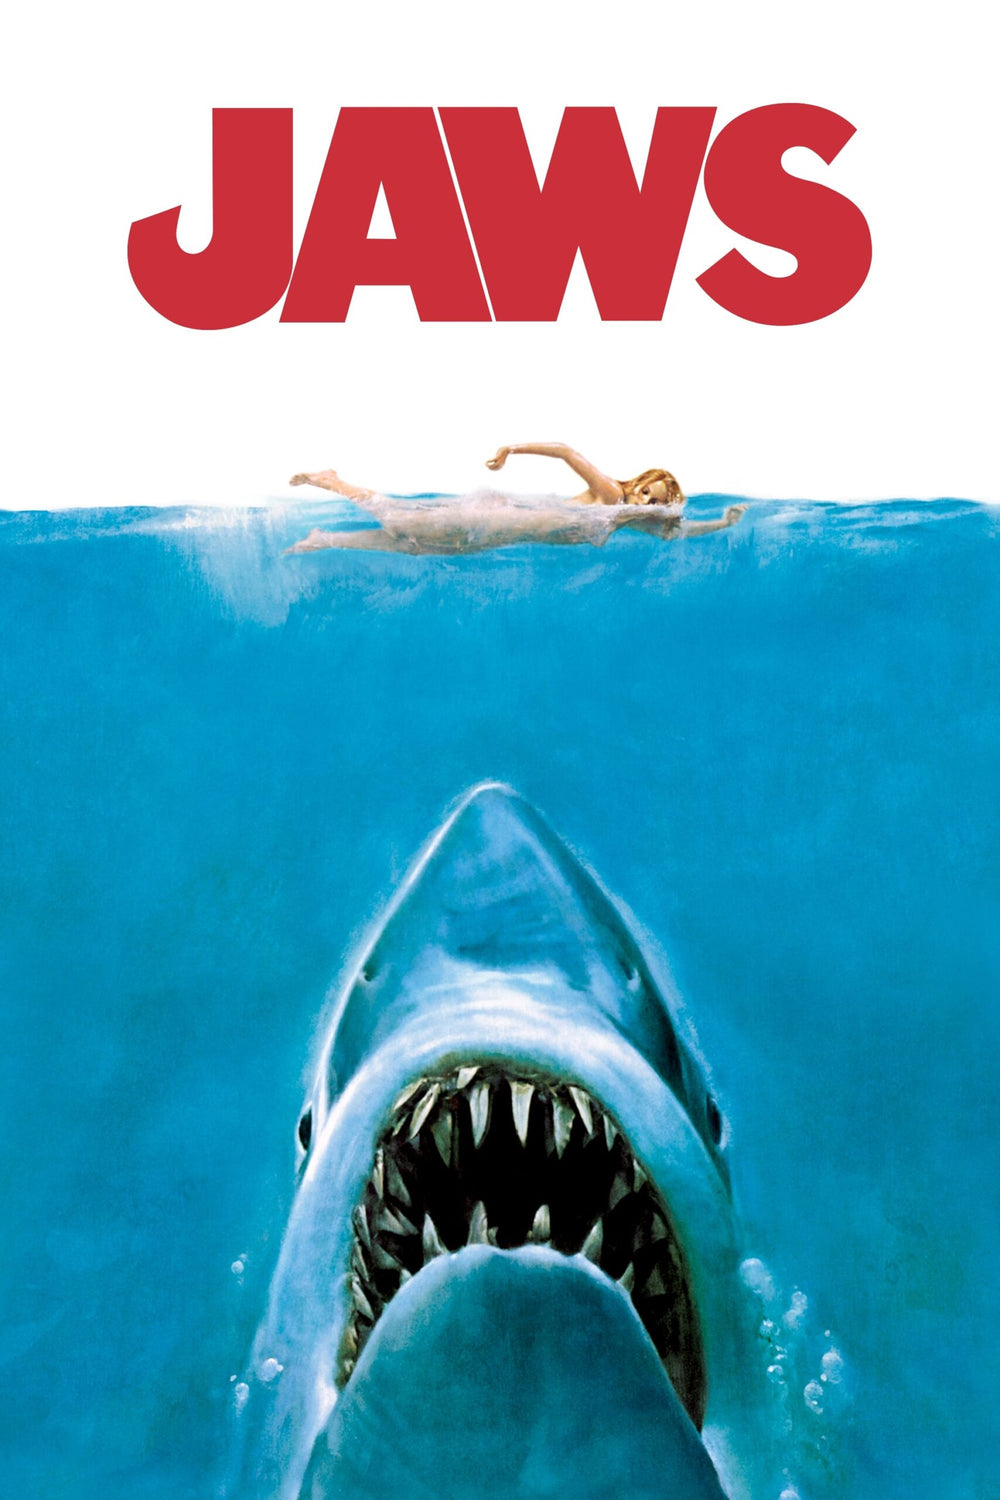 JAWS HD Vudu/iTunes Via moviesanywhere